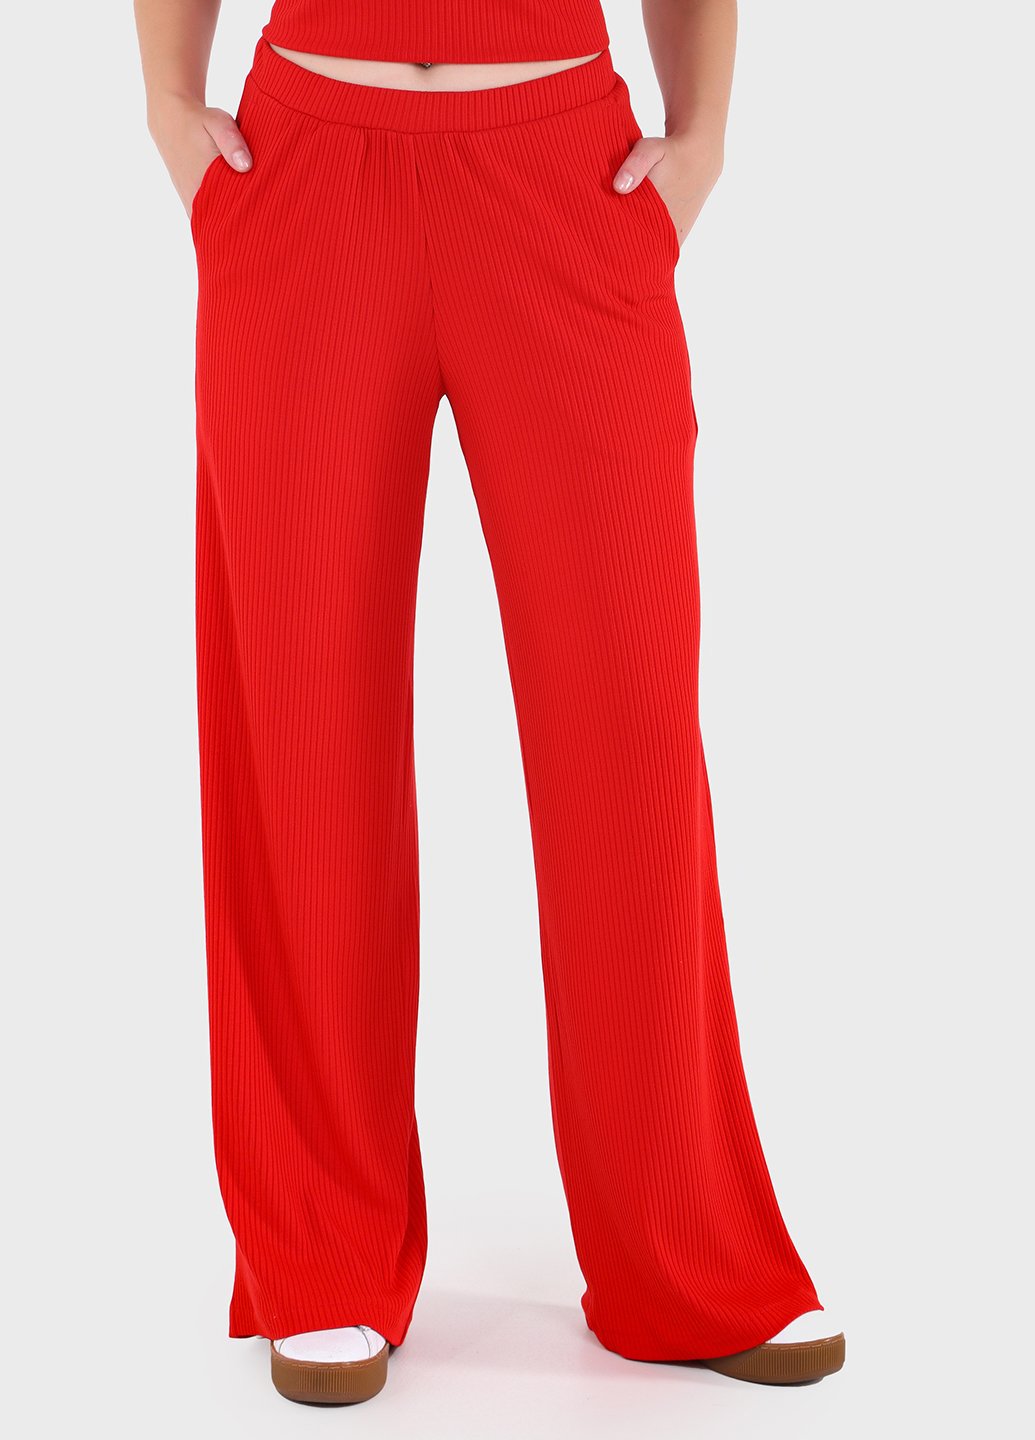 Летние брюки женские палаццо Merlini Амаранти 600000071 - Красный, 42-44